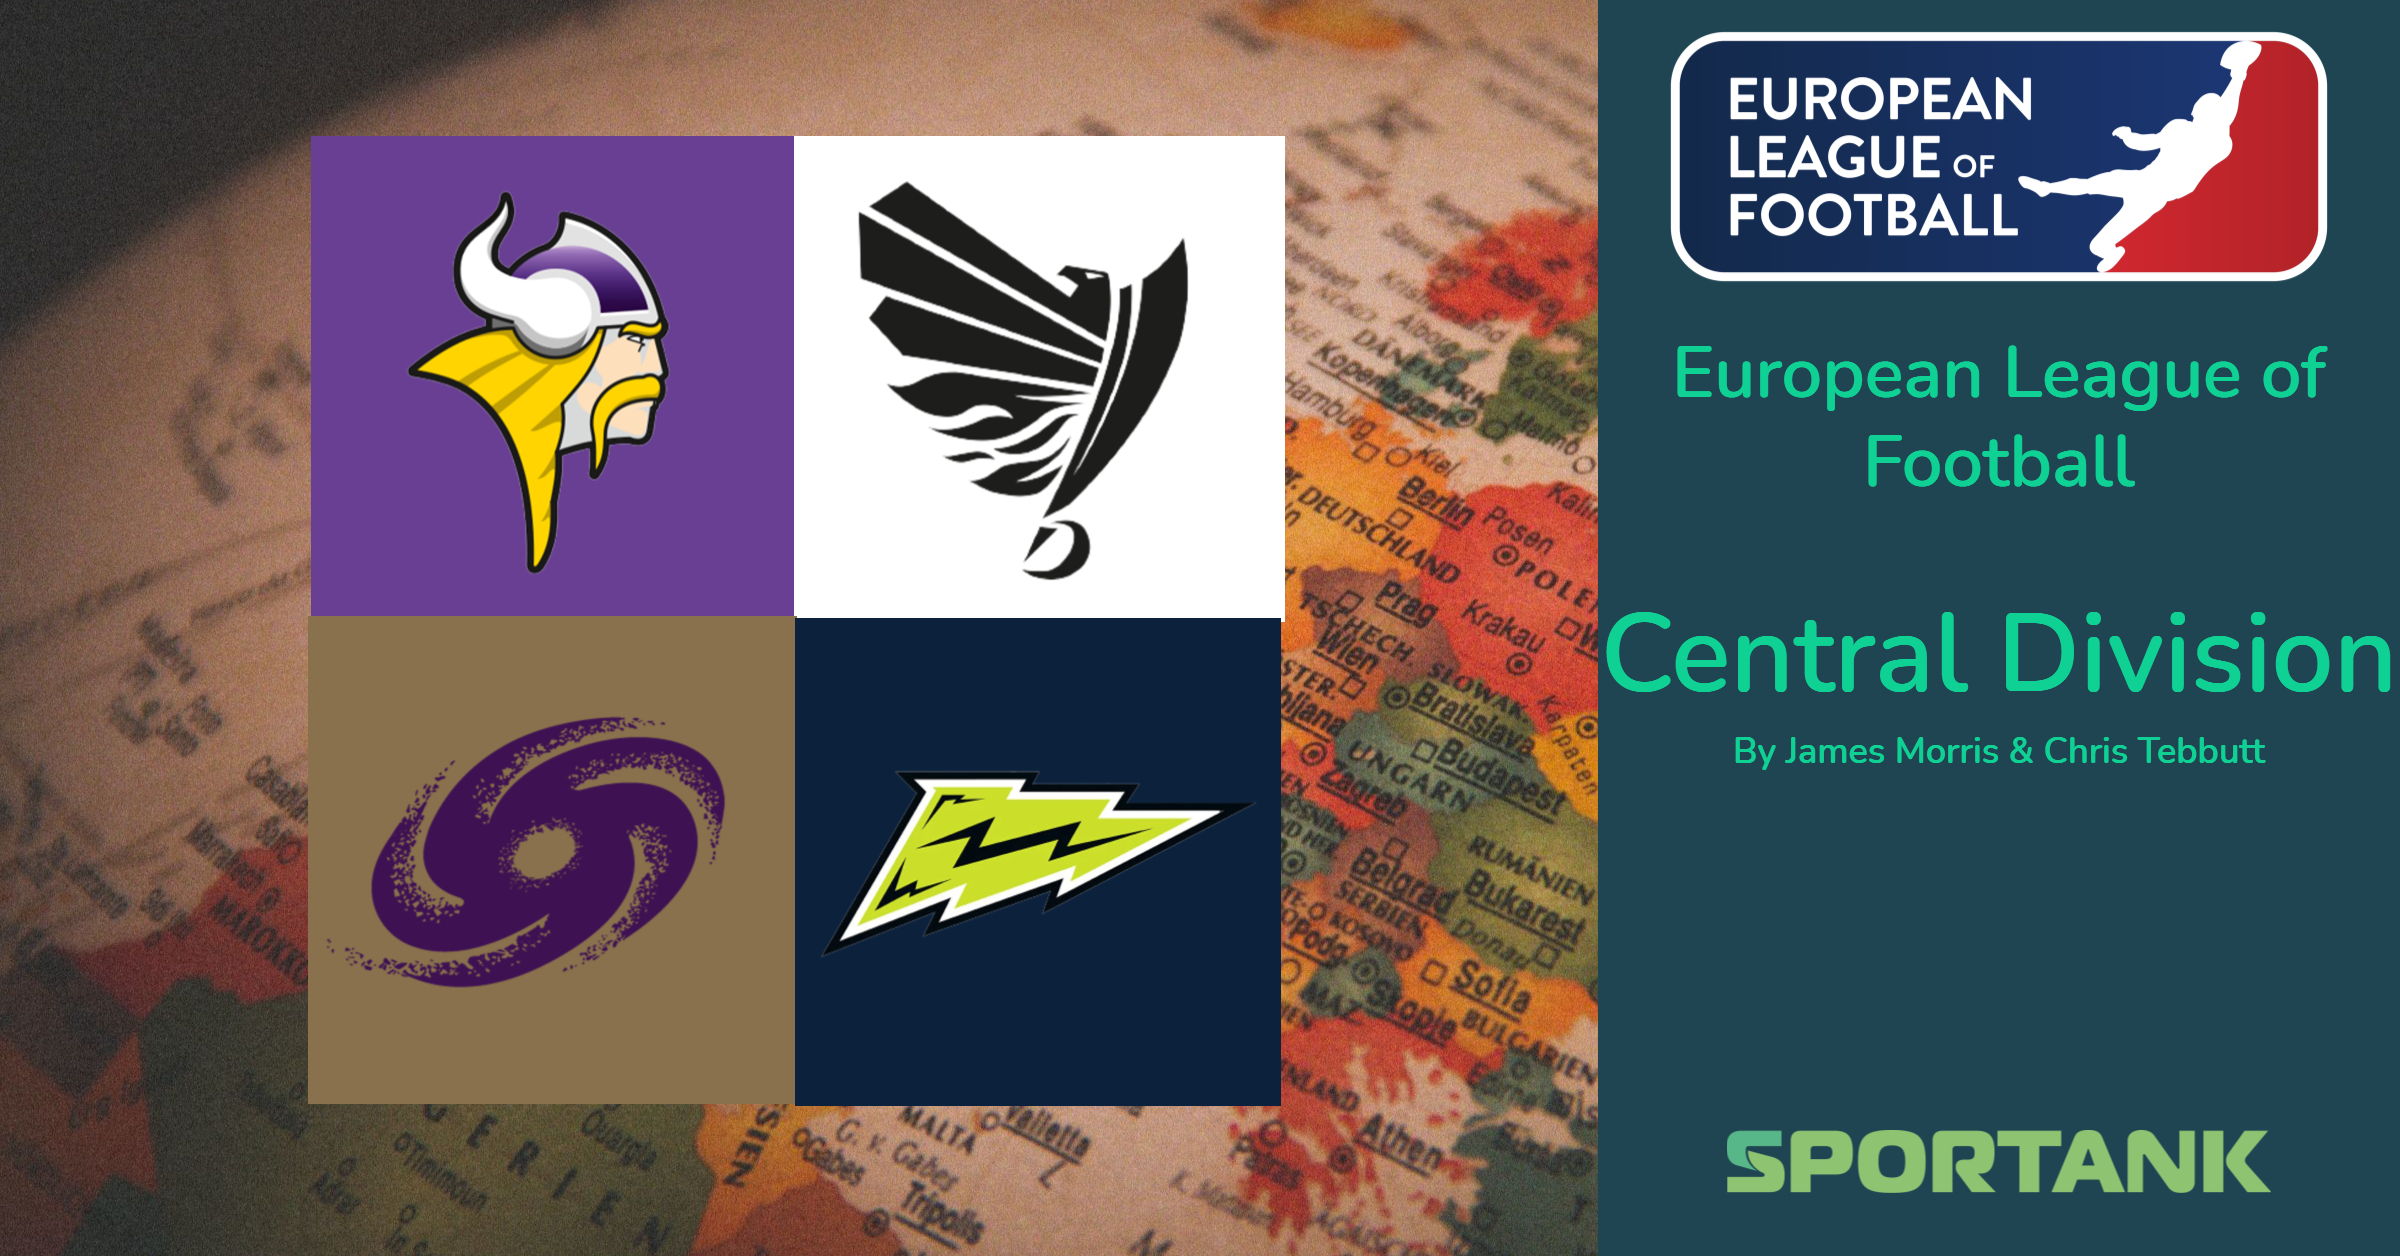 European League of Football: Central Division